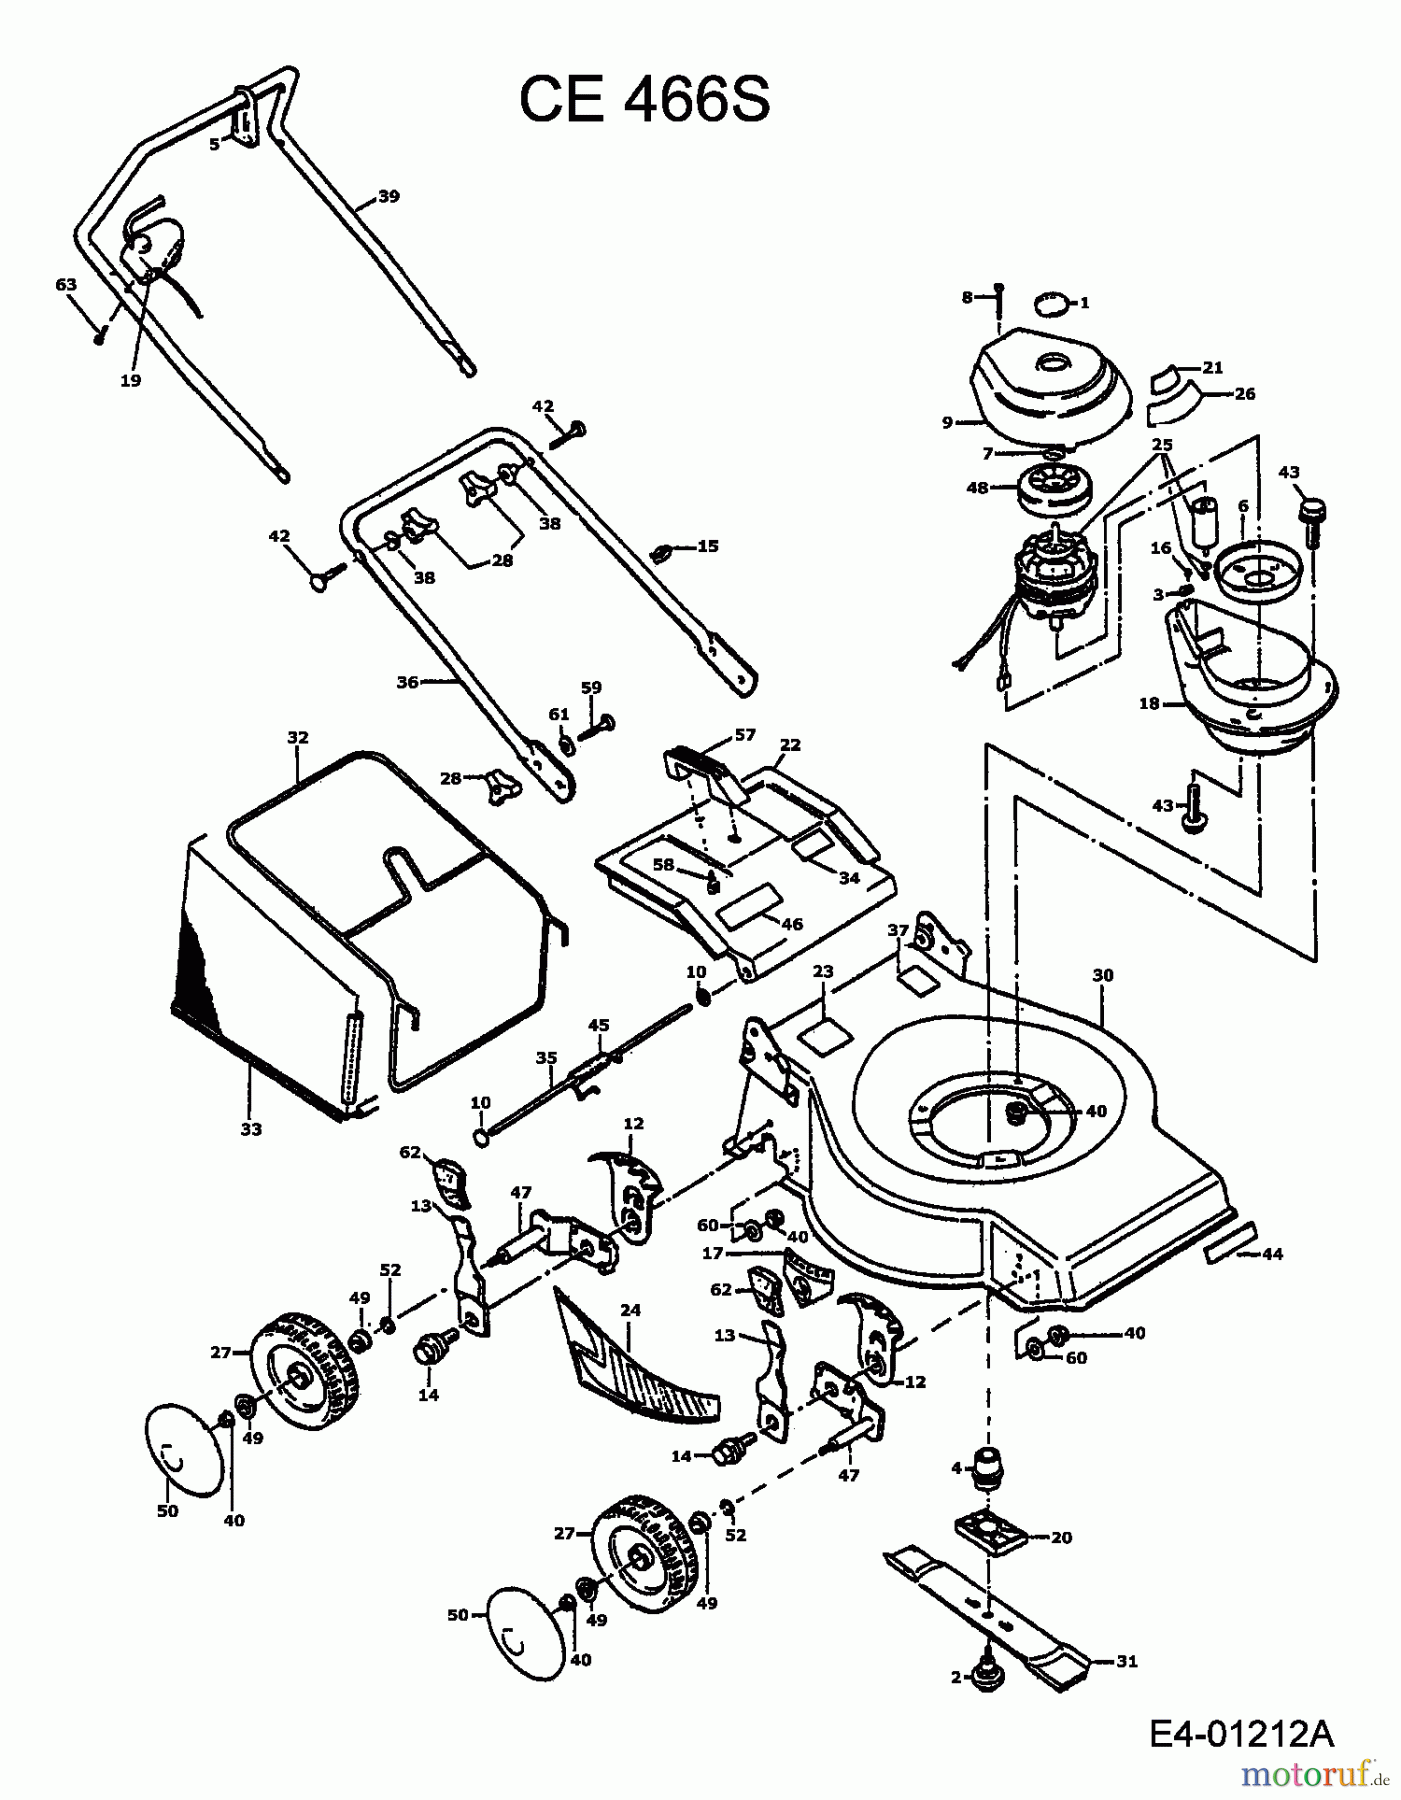  MTD Electric mower CE 466 S 901E465S002  (1994) Basic machine